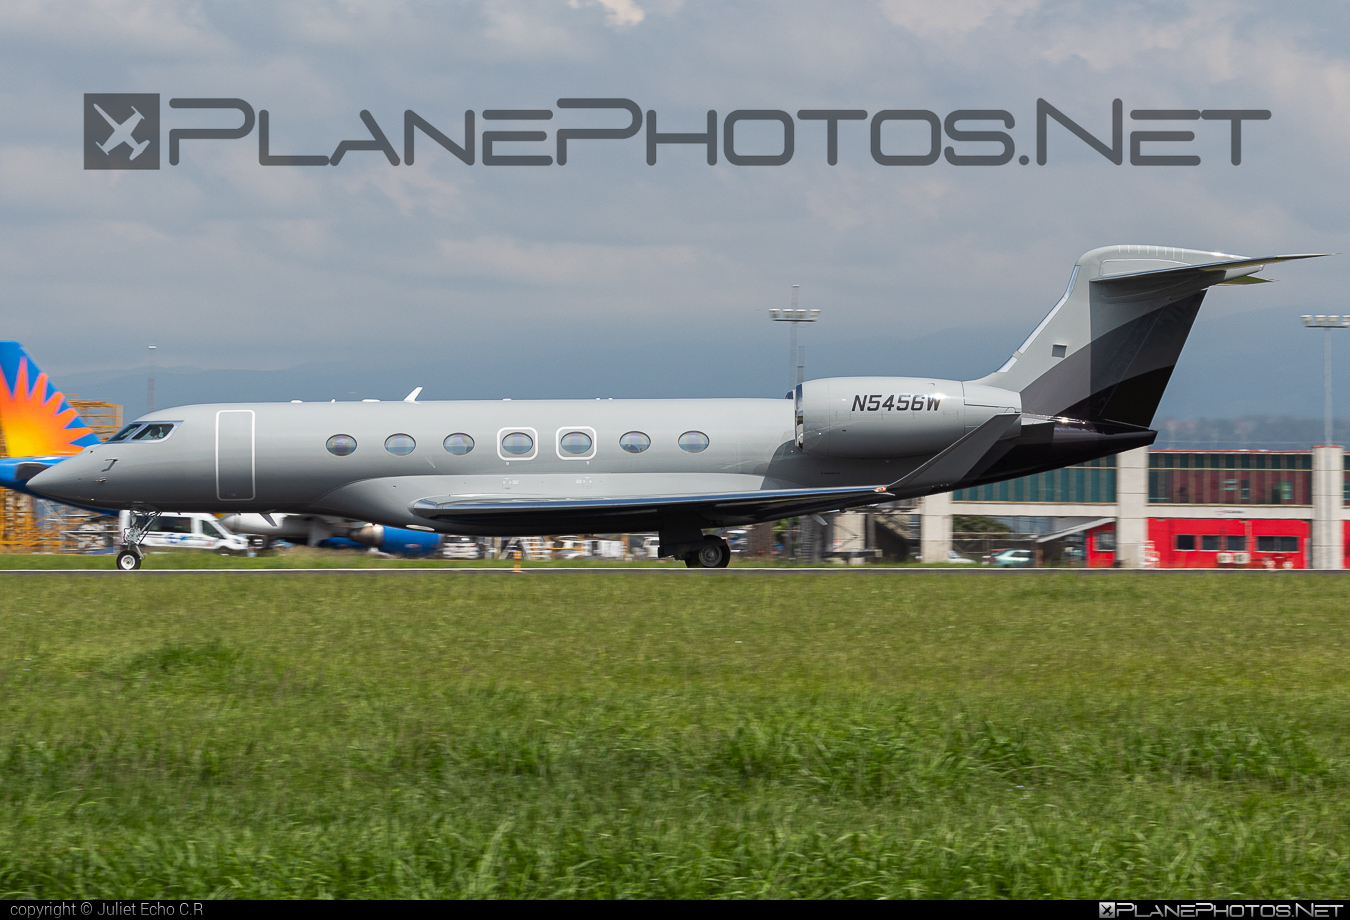 https://www.planephotos.net/photos/29961_Gulfstream-G600_N5456W.jpg